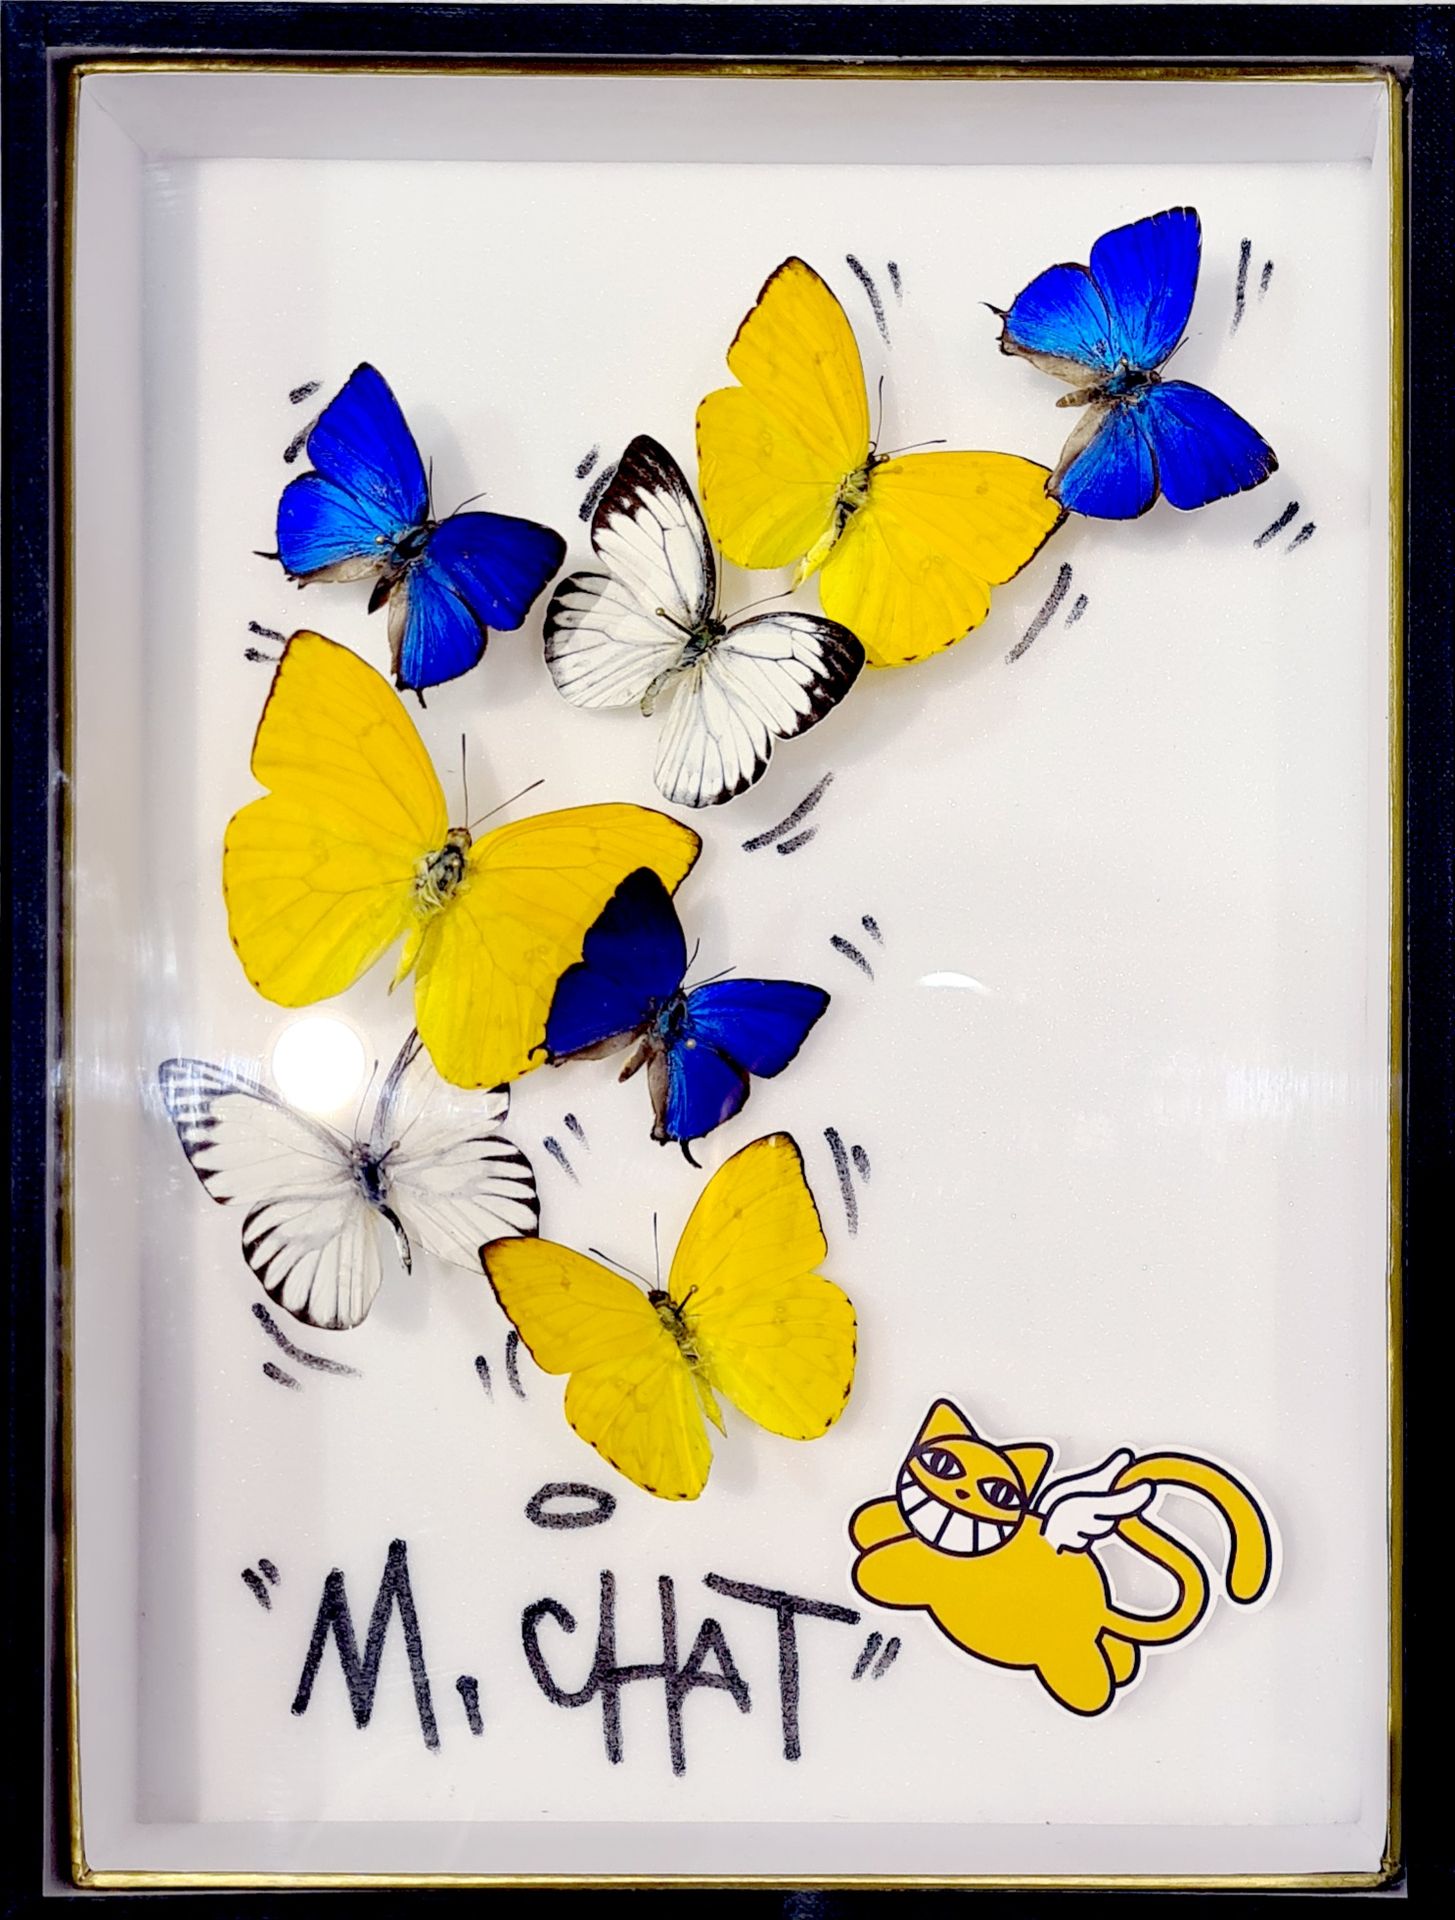 B. Pietri B. Pietri - M. Chat

Mariposas reales y gato de M. Chat clavados en la&hellip;